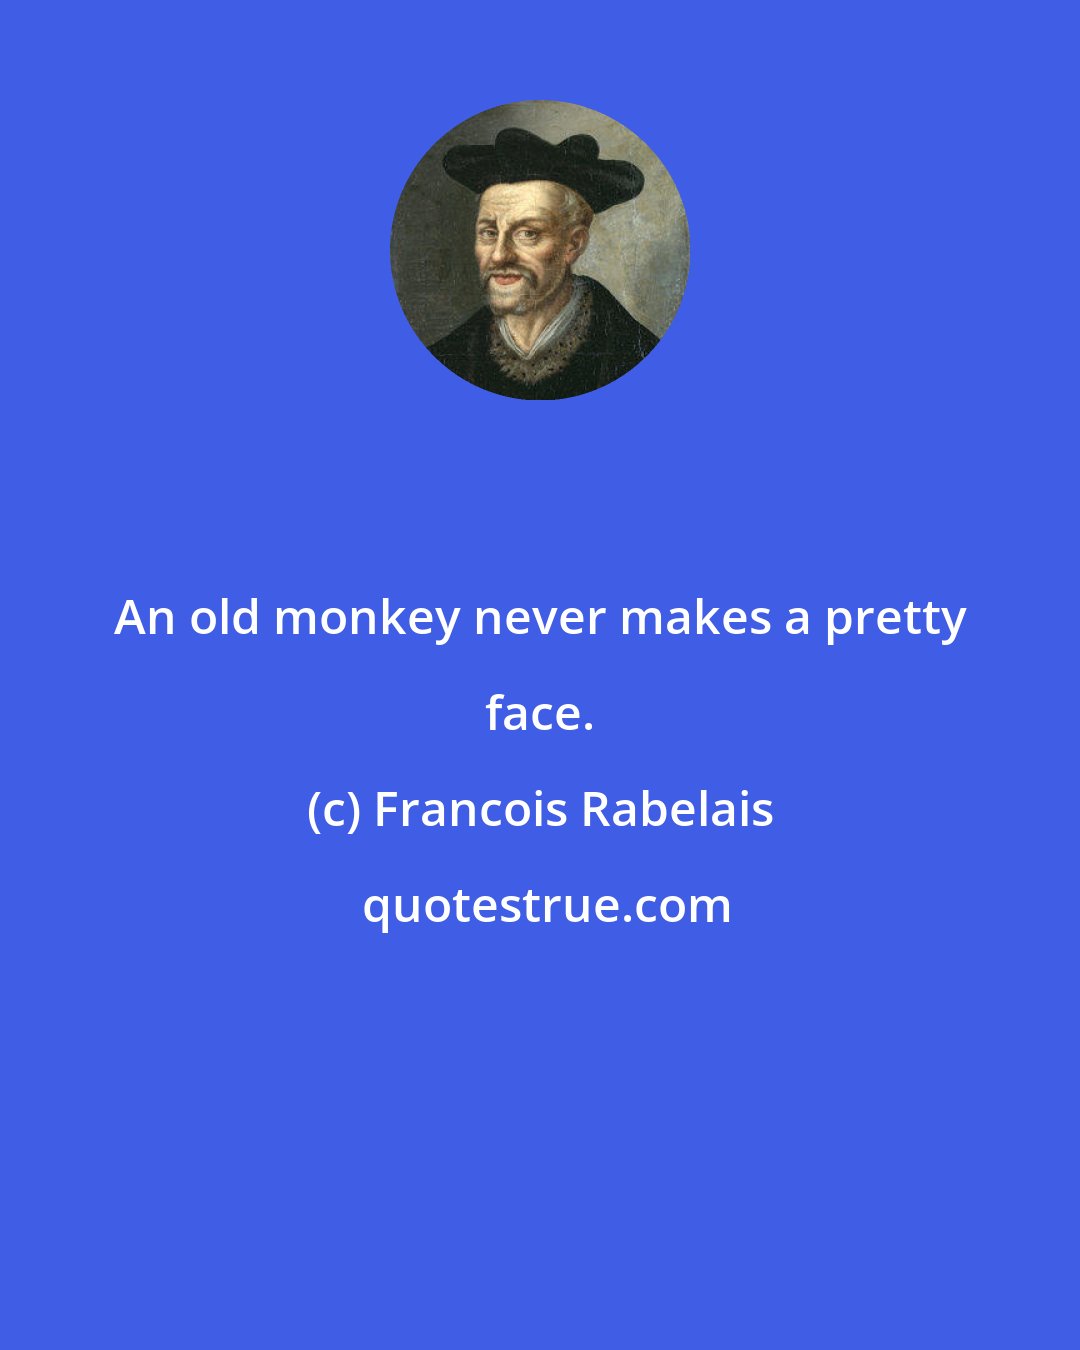 Francois Rabelais: An old monkey never makes a pretty face.